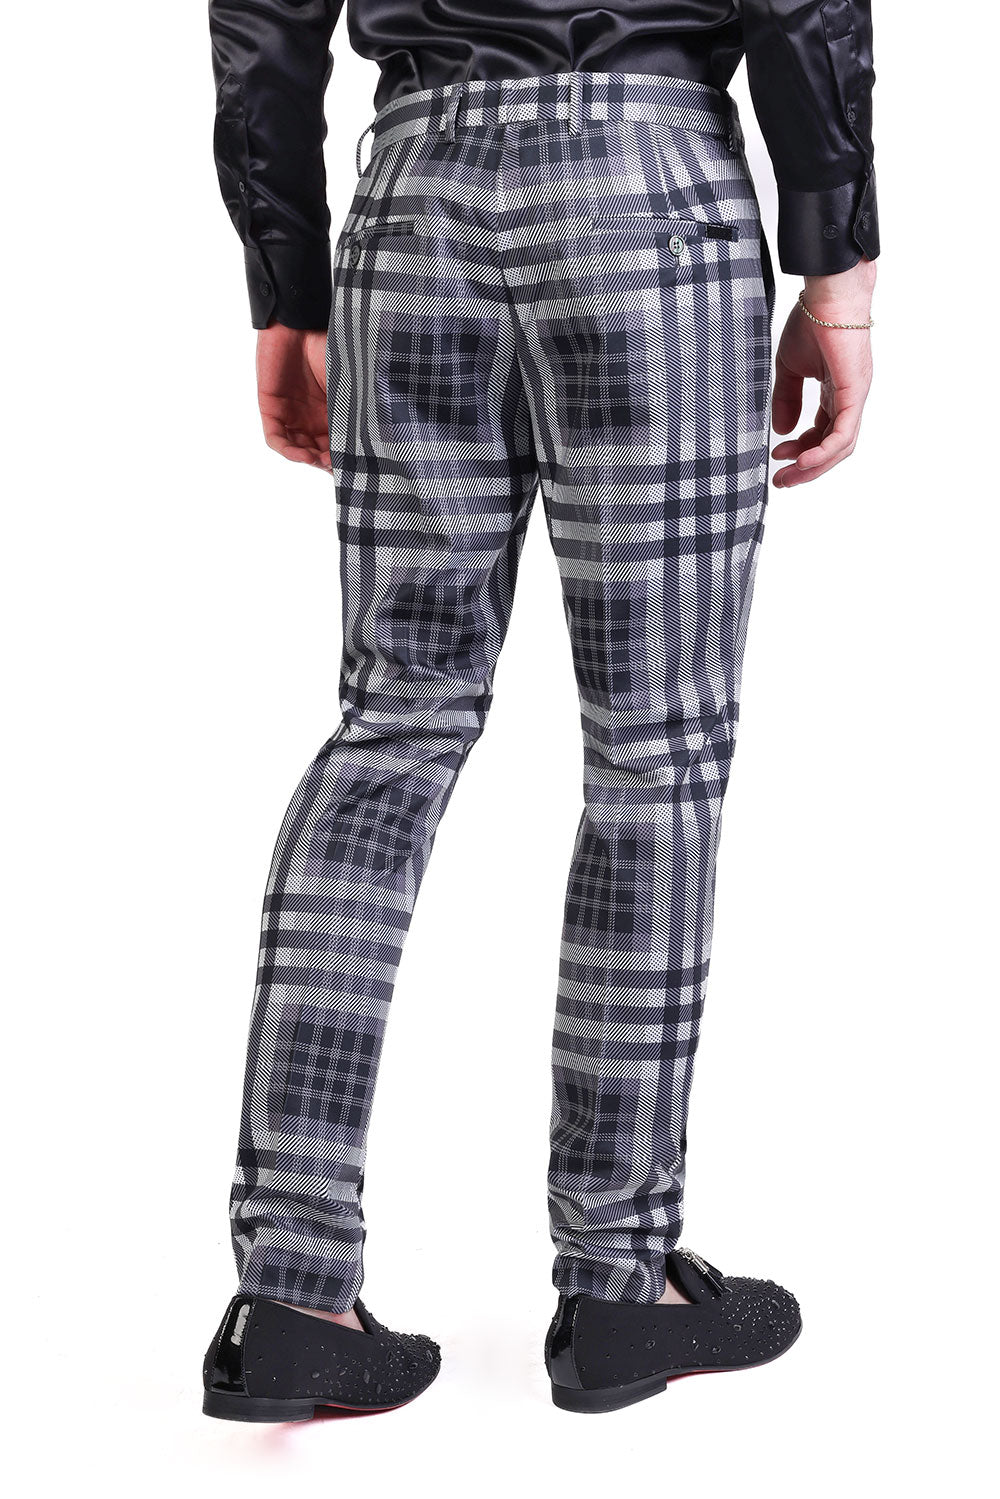 Barabas Men's Luxury Plaid Checkered Chino Dress Slim Pants CP201 Black